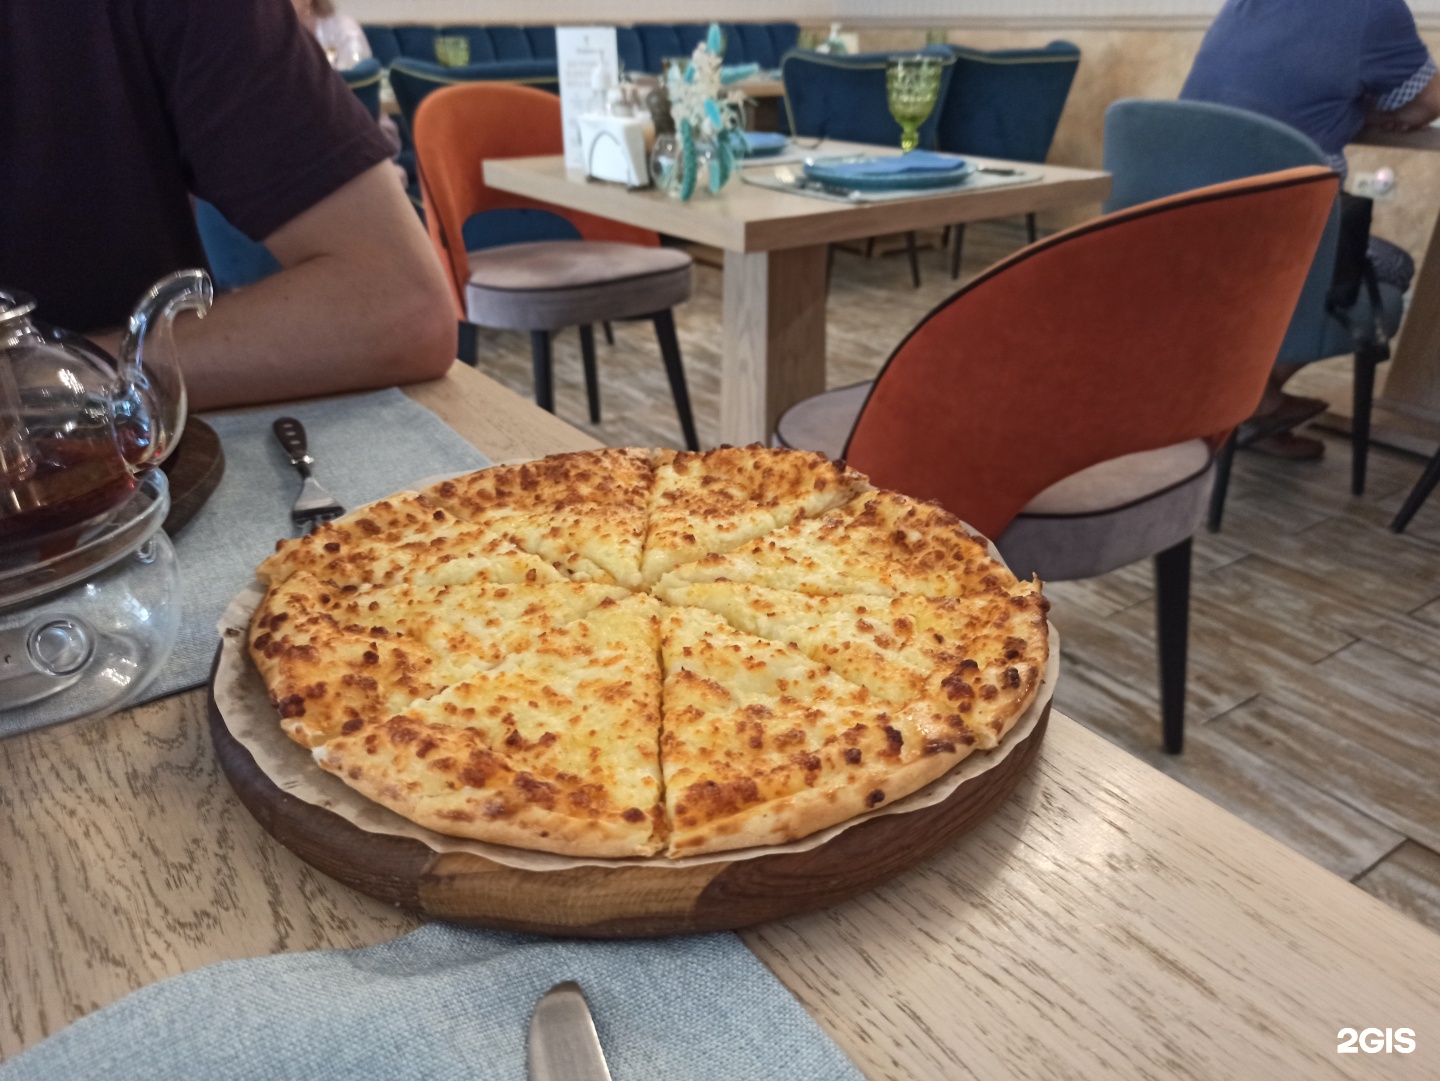 Hardcore Cheese Pizza